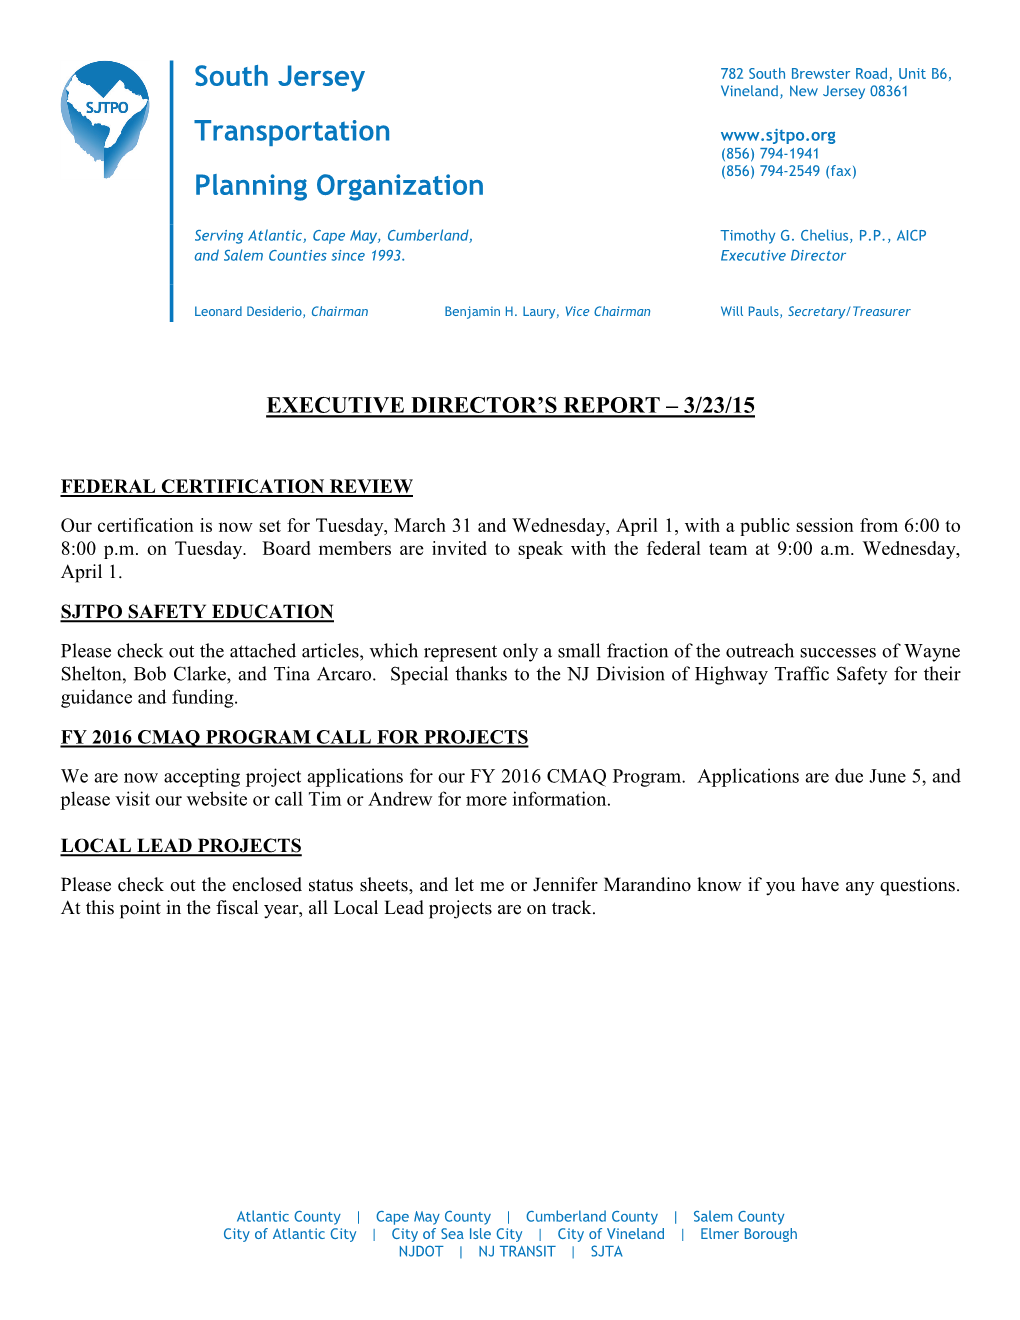 South Jersey Transportation Planning Organization